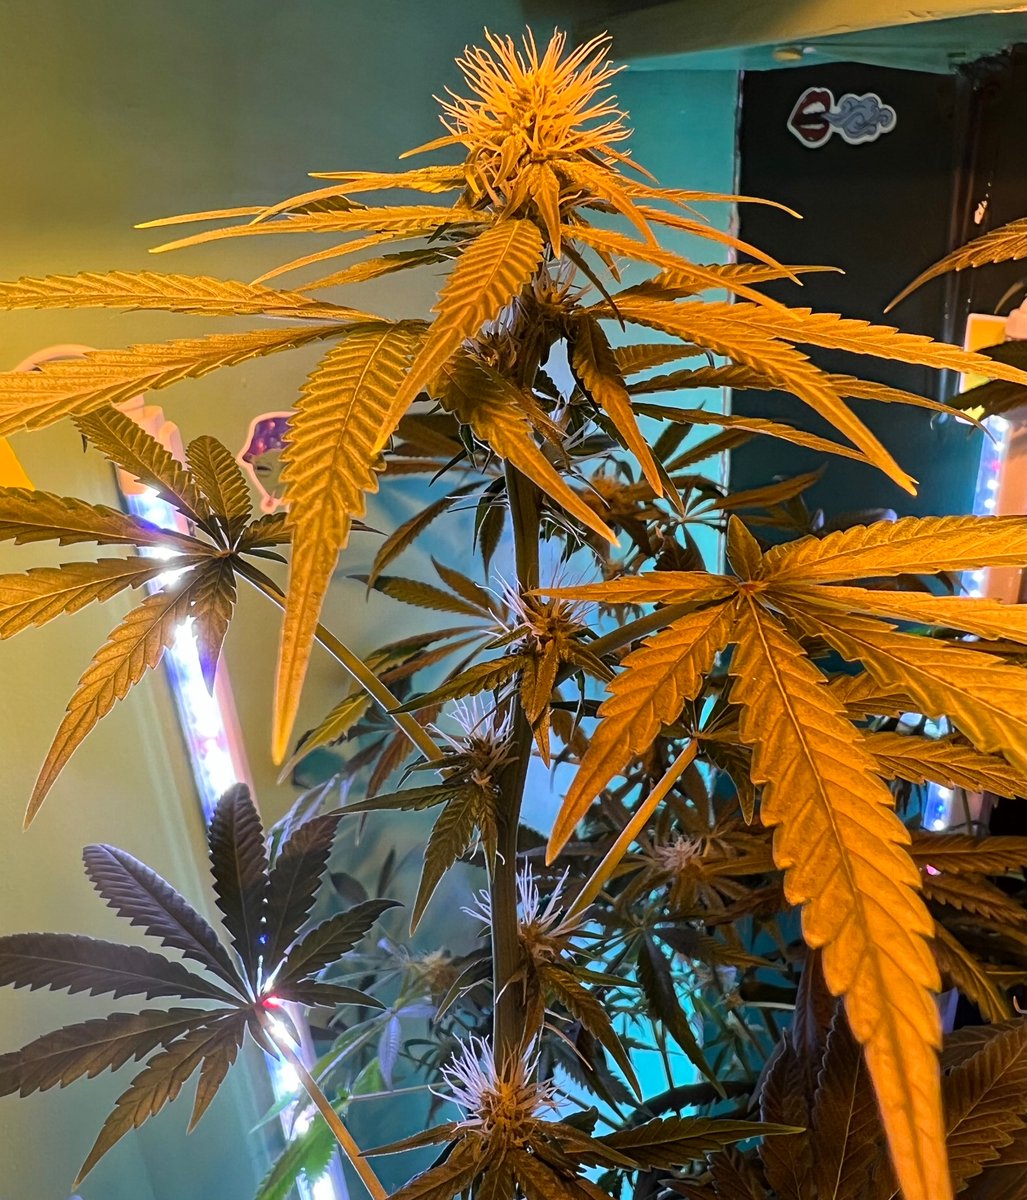 Nice Pineapple kush #hemp buds growing in the middle of the #marijuana flowering. 🙂💨💨💨😎

#cannabis